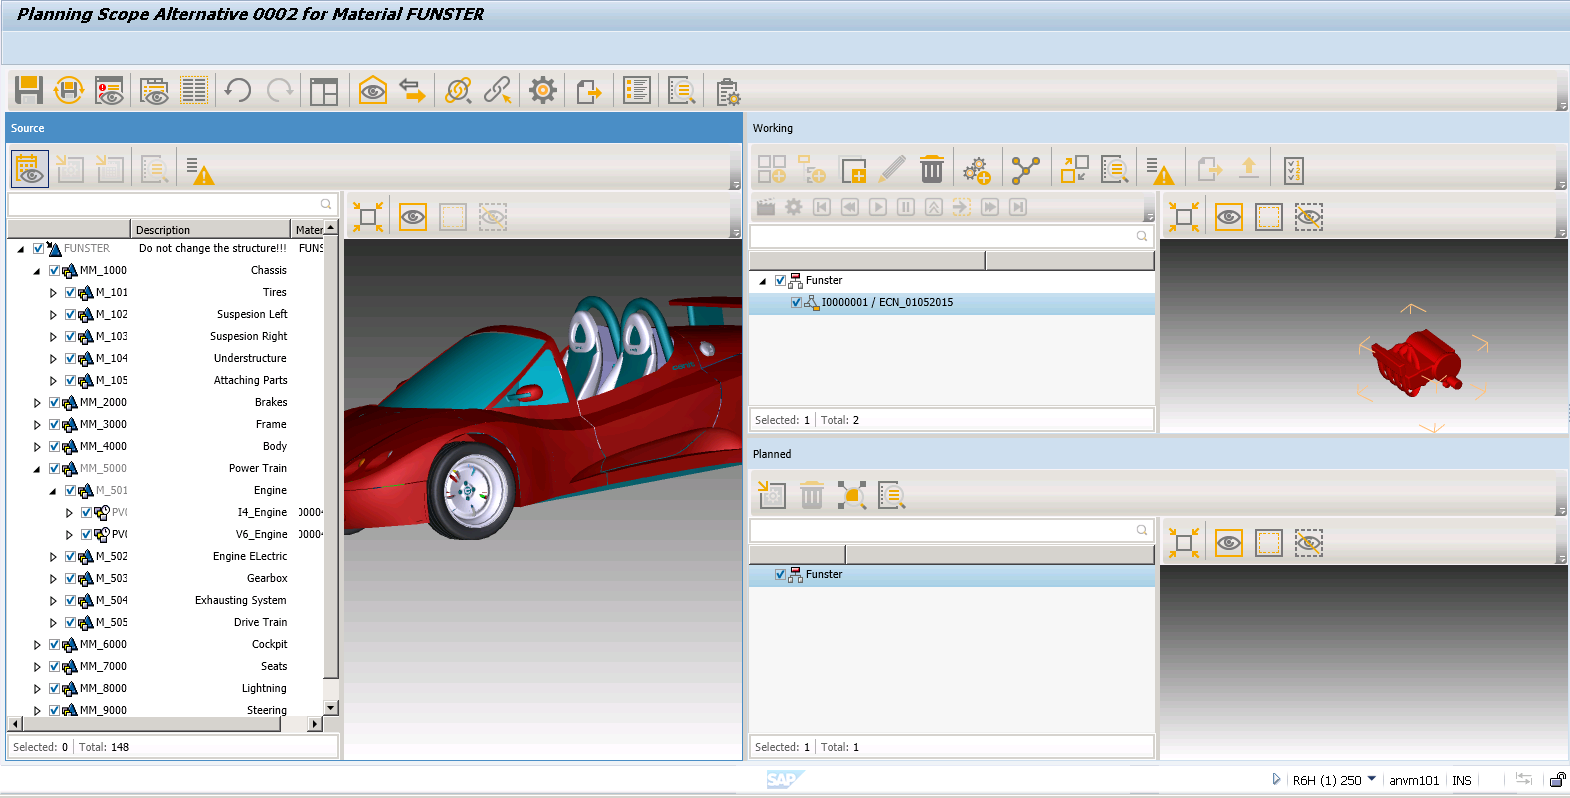 3D Visual Enterprise Manufacturing Planner